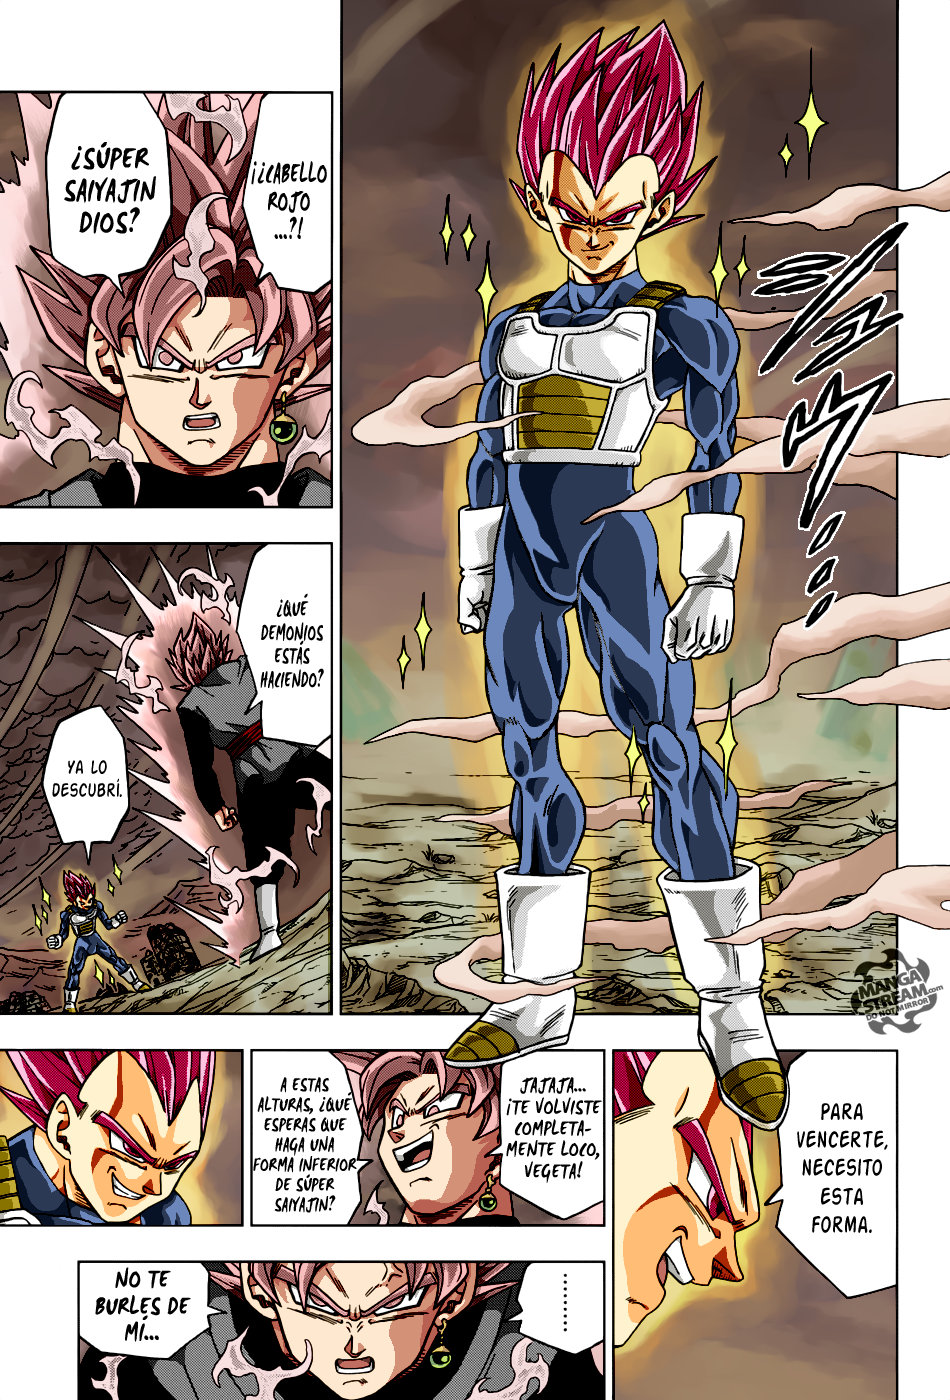 BolmanJump - Dragon ball super manga 22 color #2